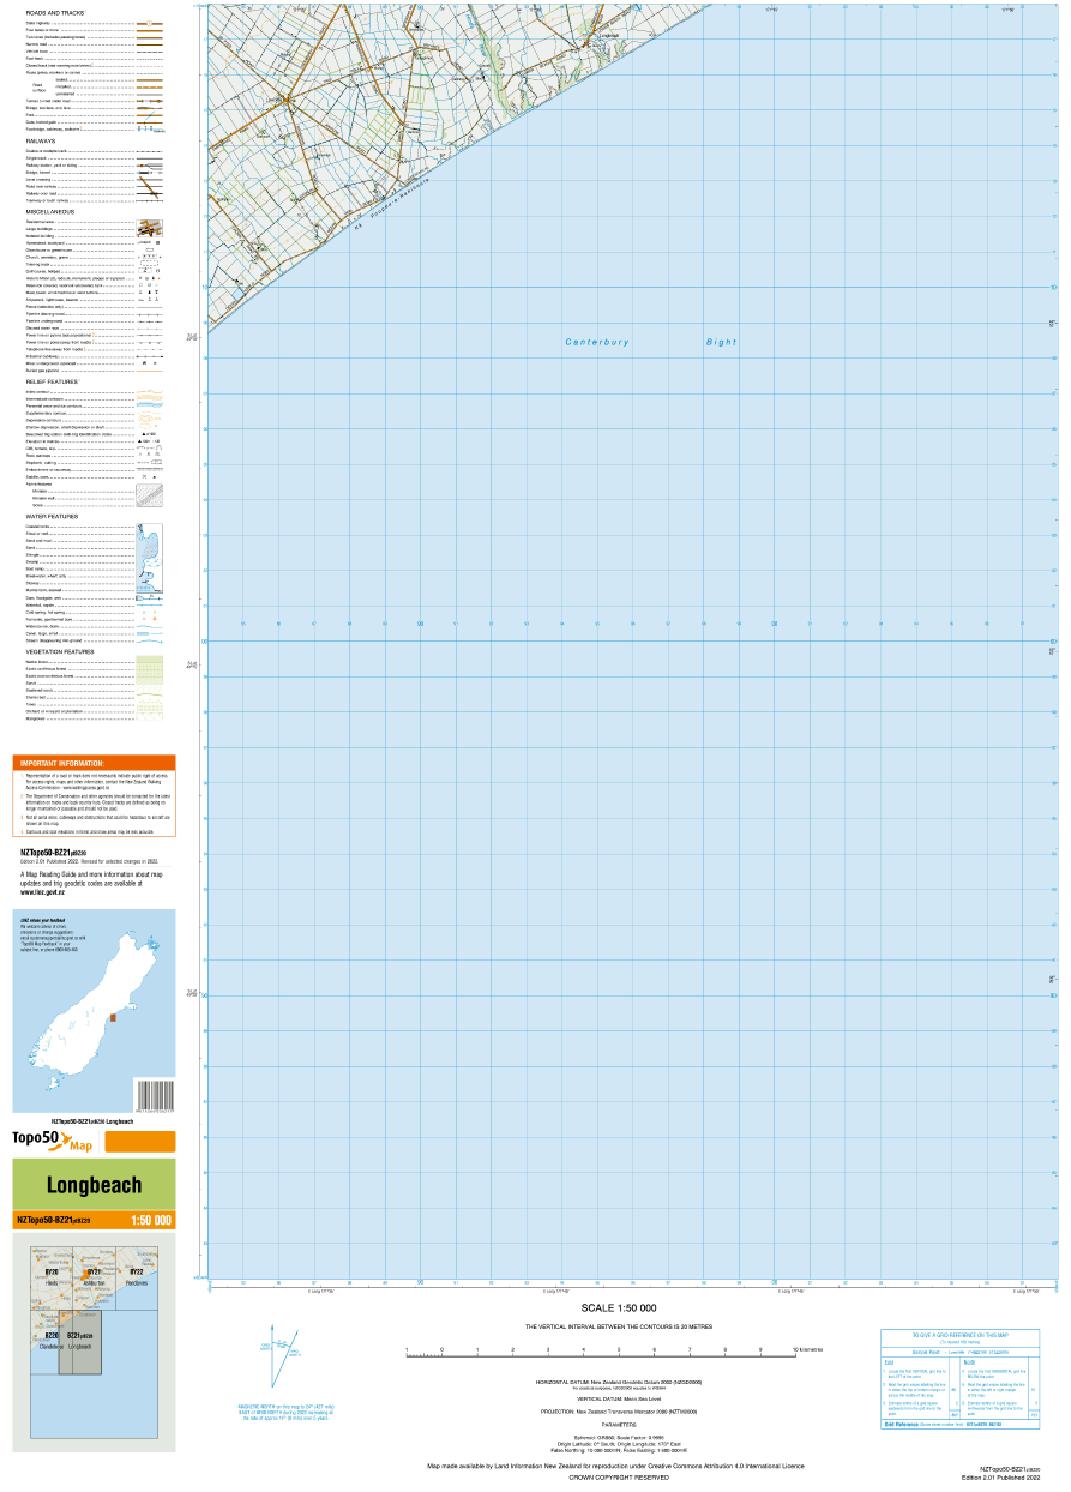 Topo map of Longbeach